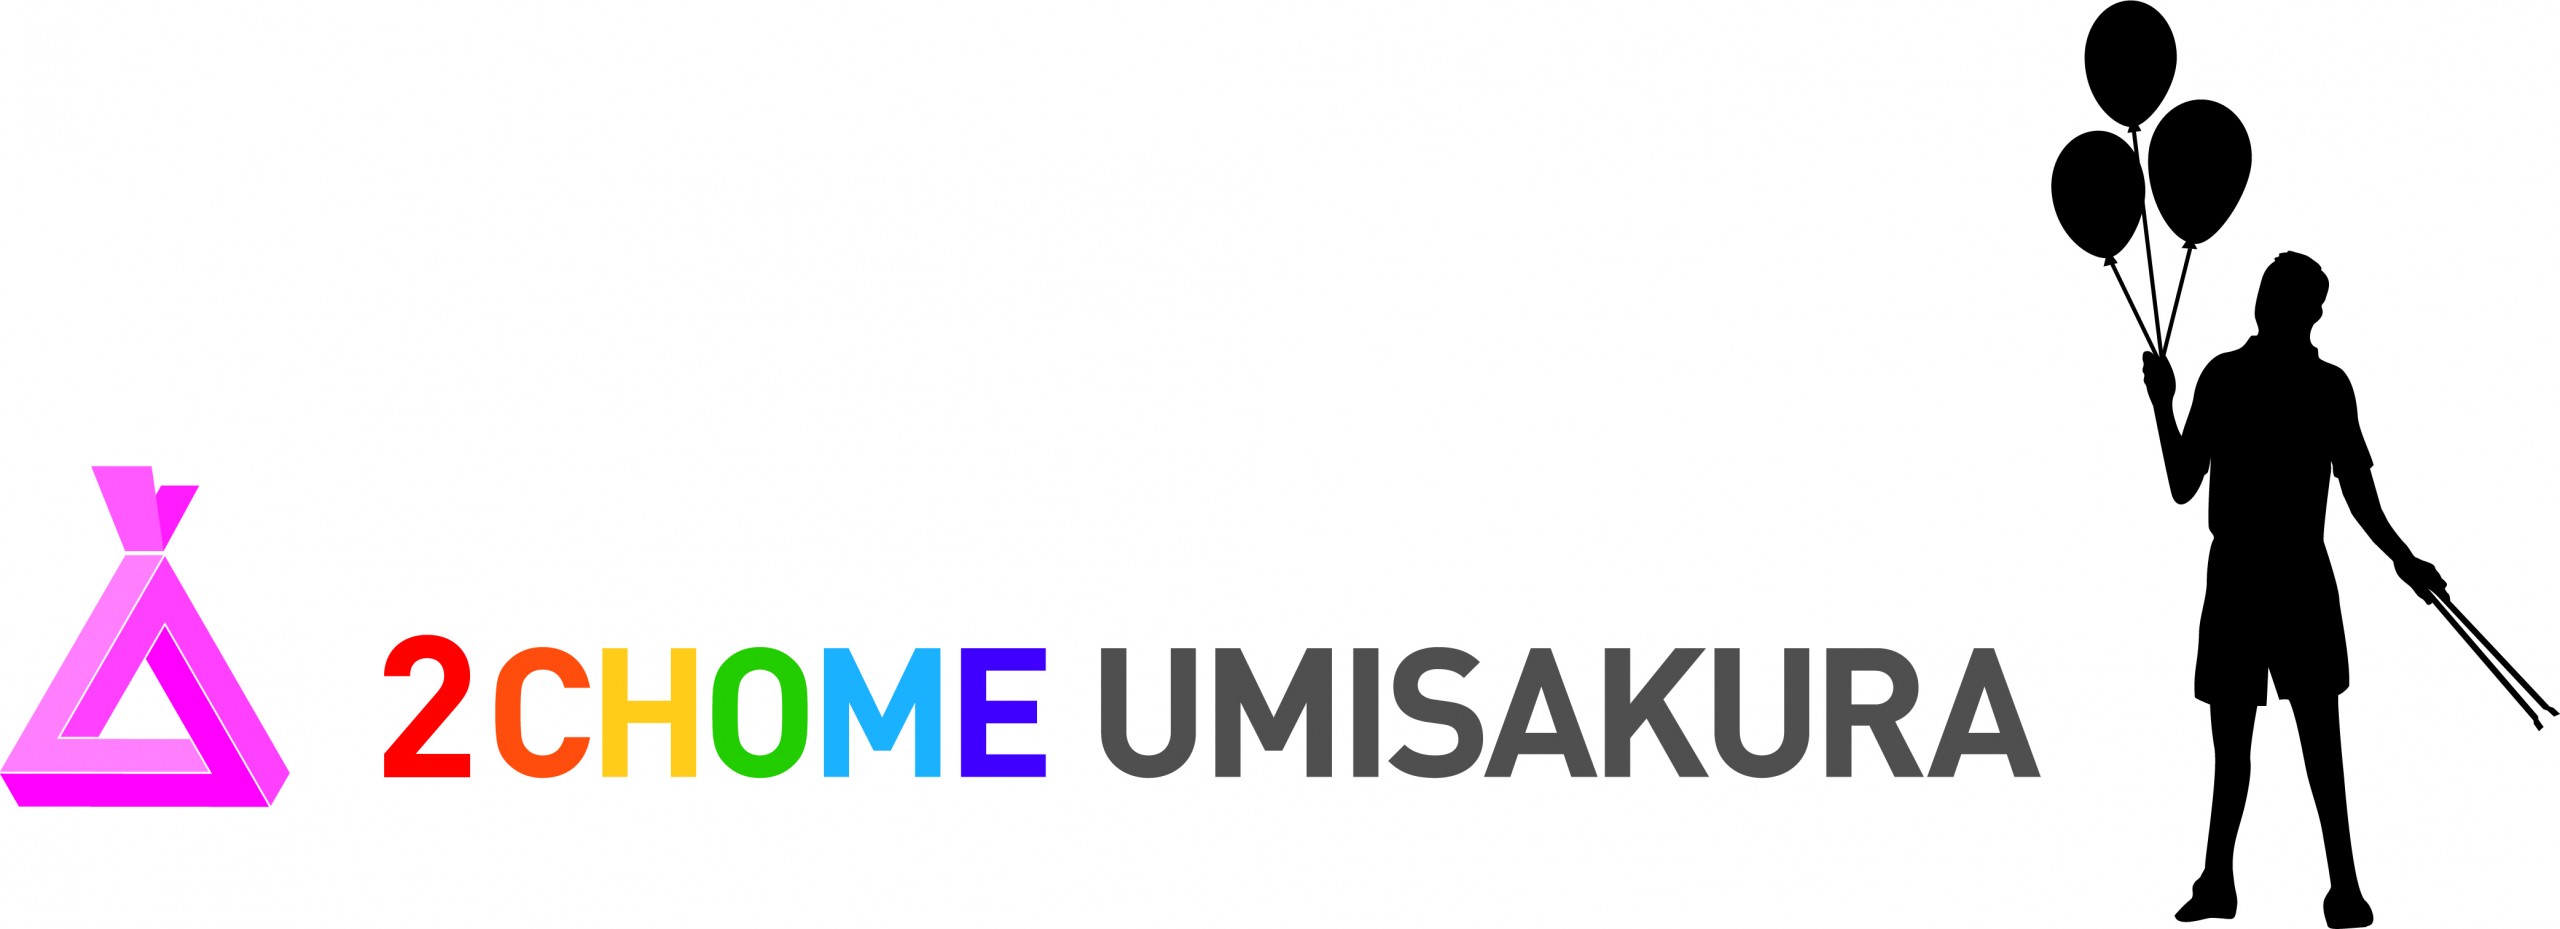 2chome_umisakura_logo-01